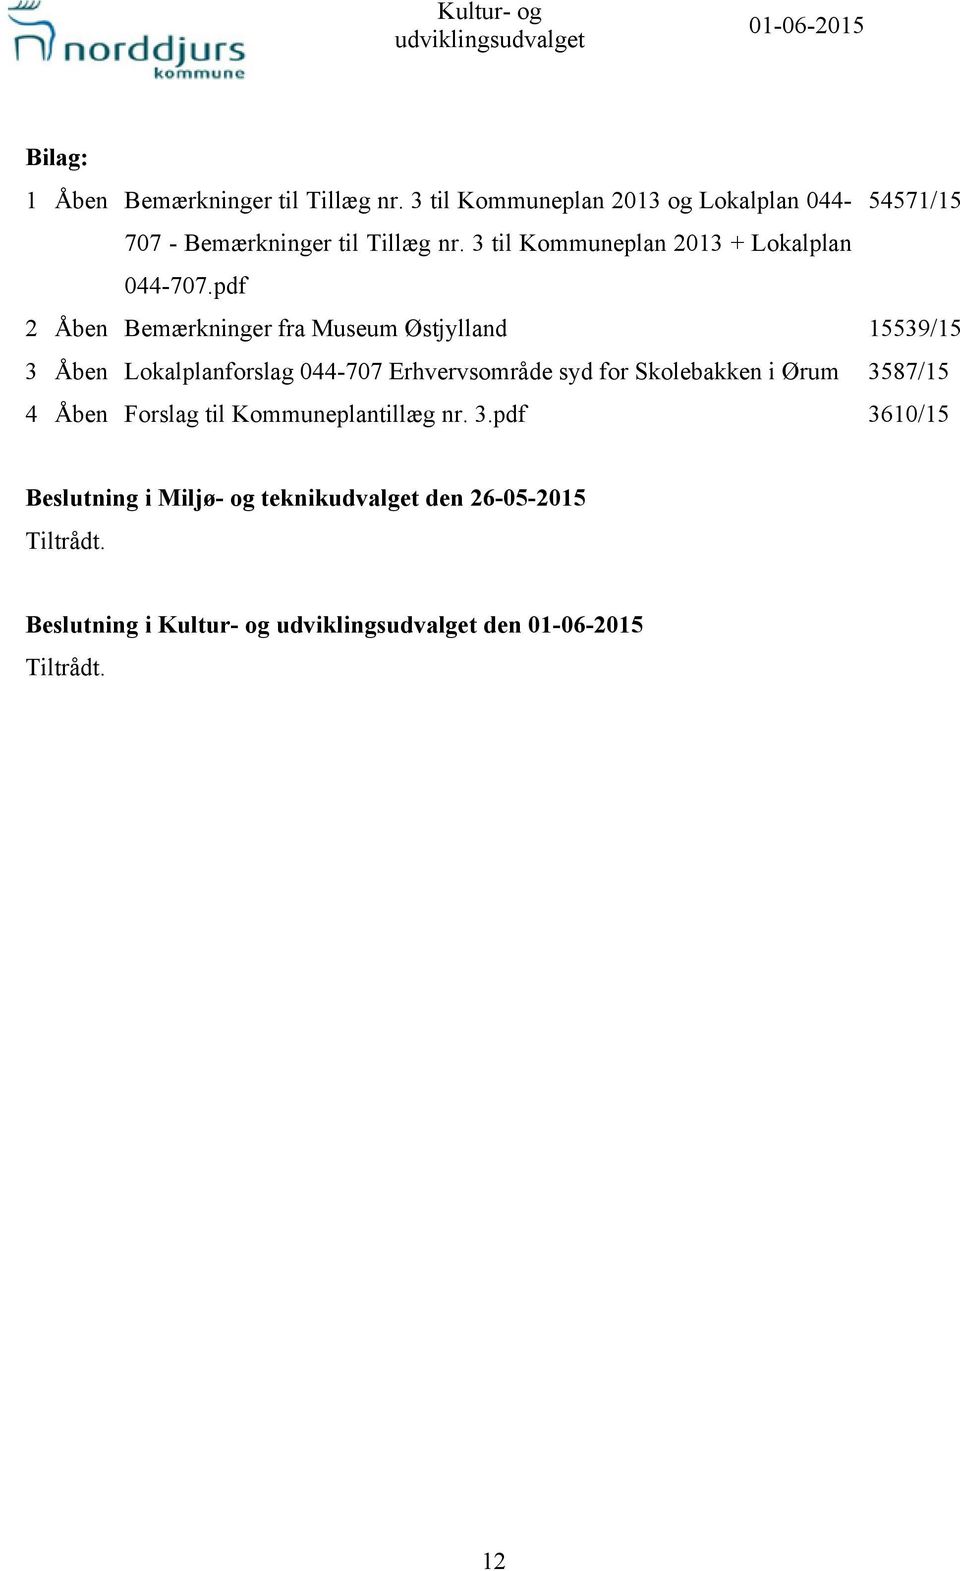 3 til Kommuneplan 2013 + Lokalplan 044-707.